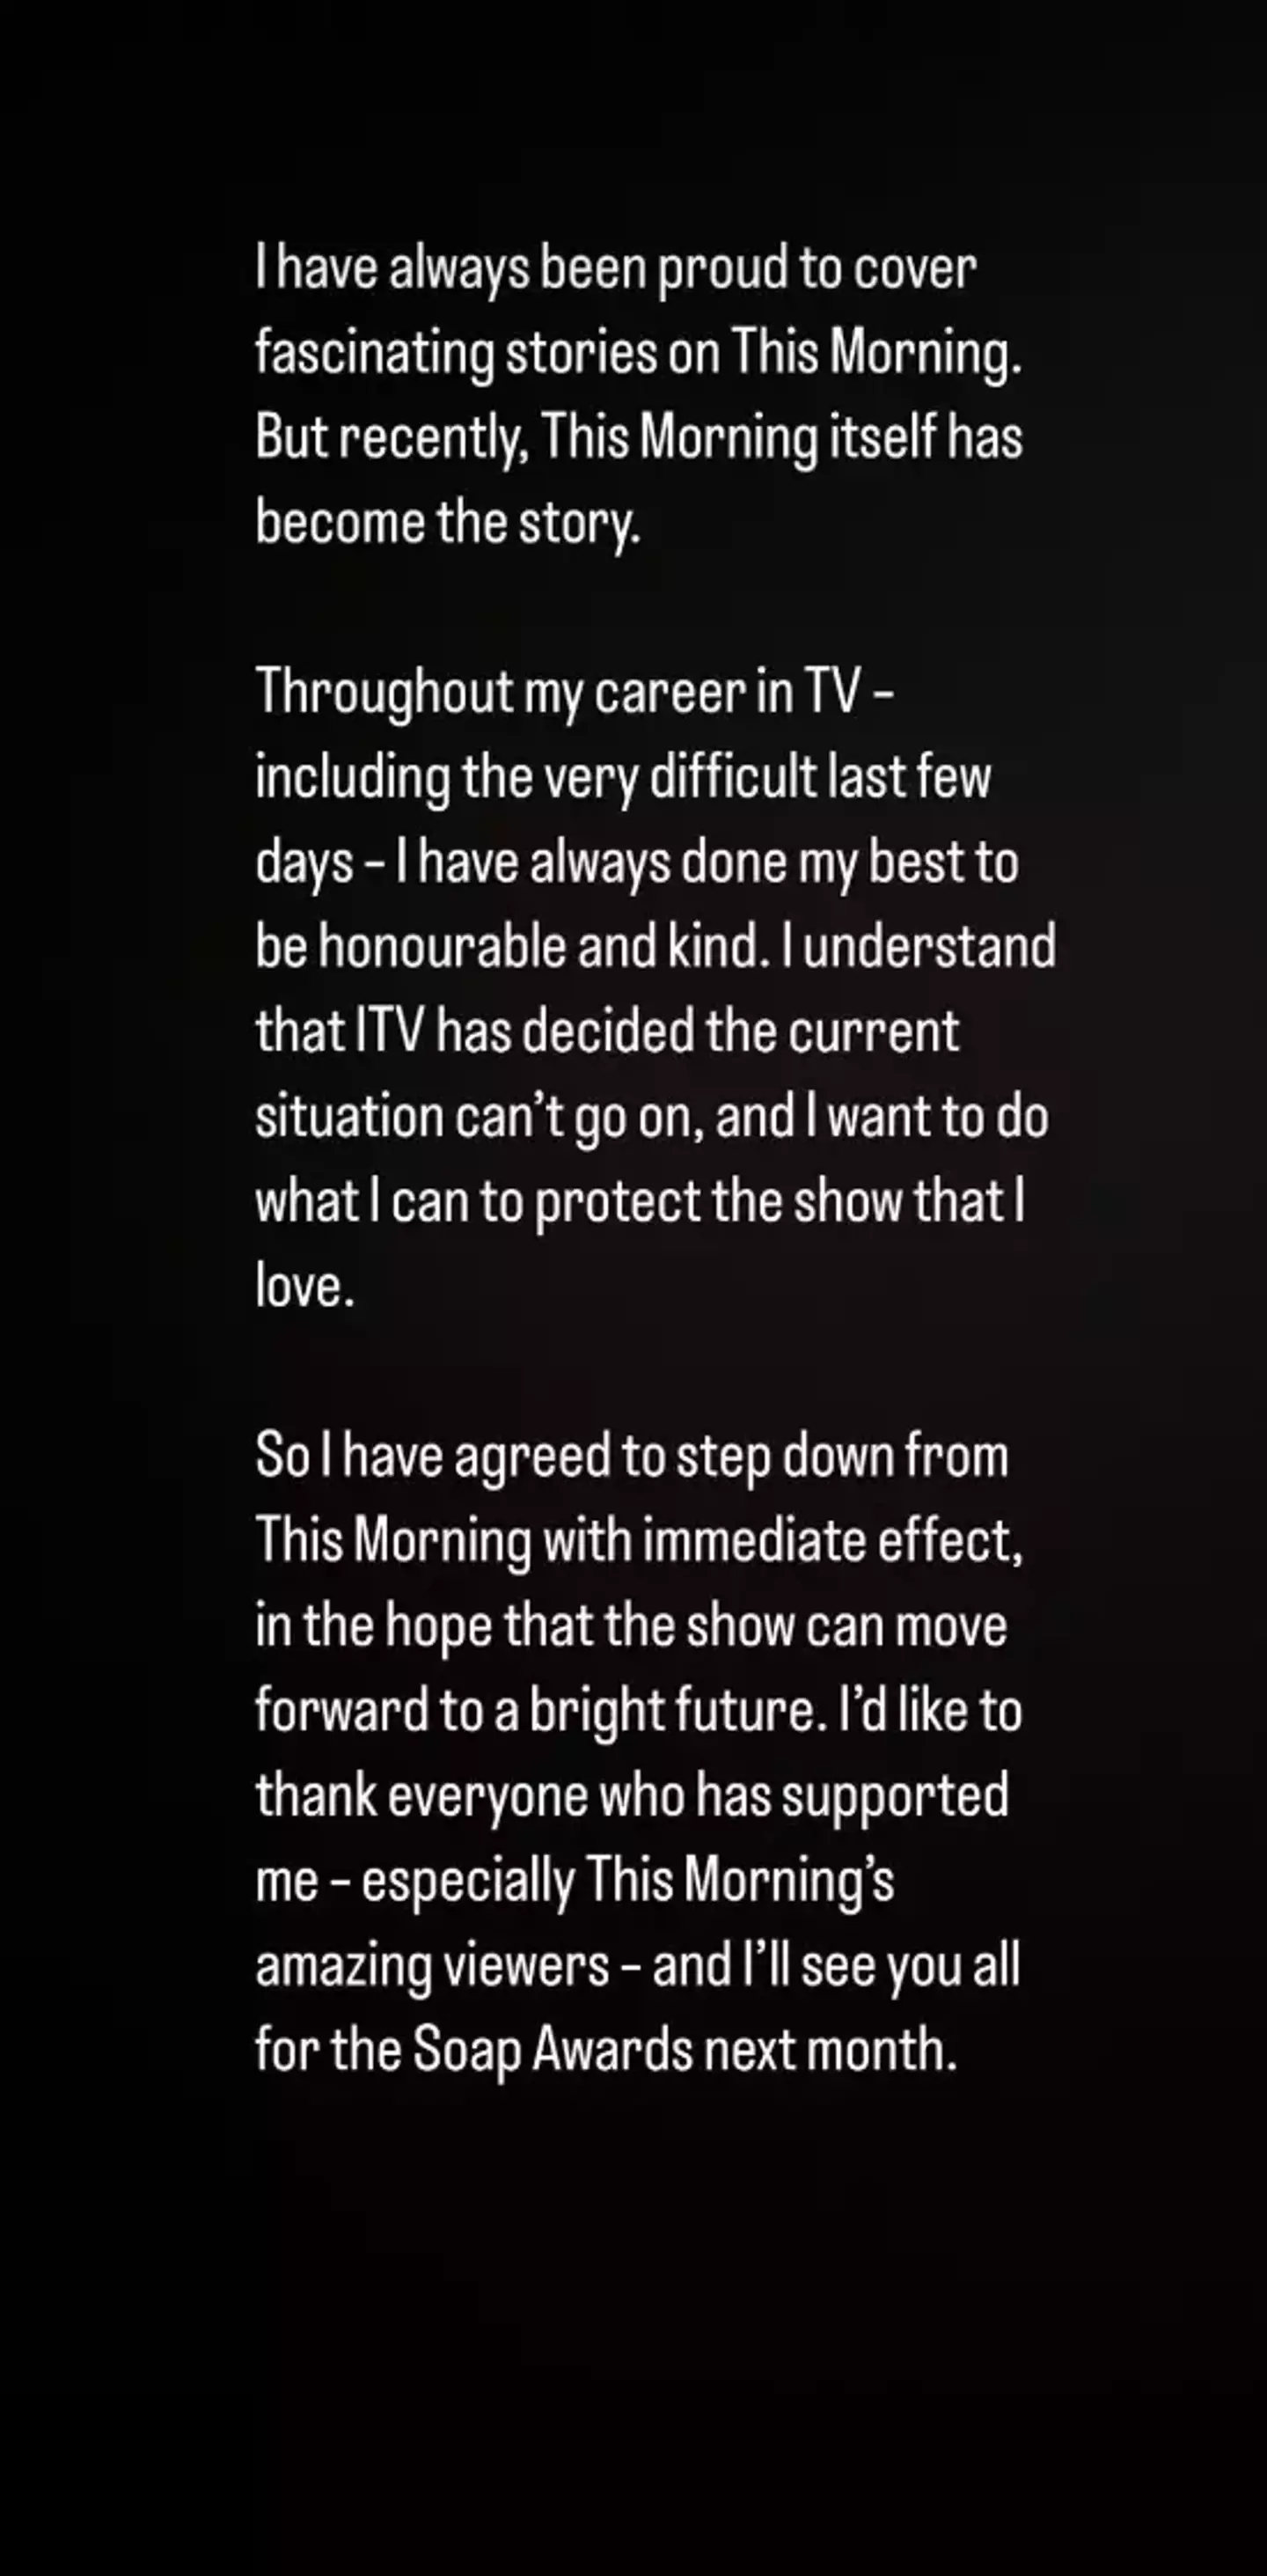 Phillip Schofield announced his departure on Instagram.